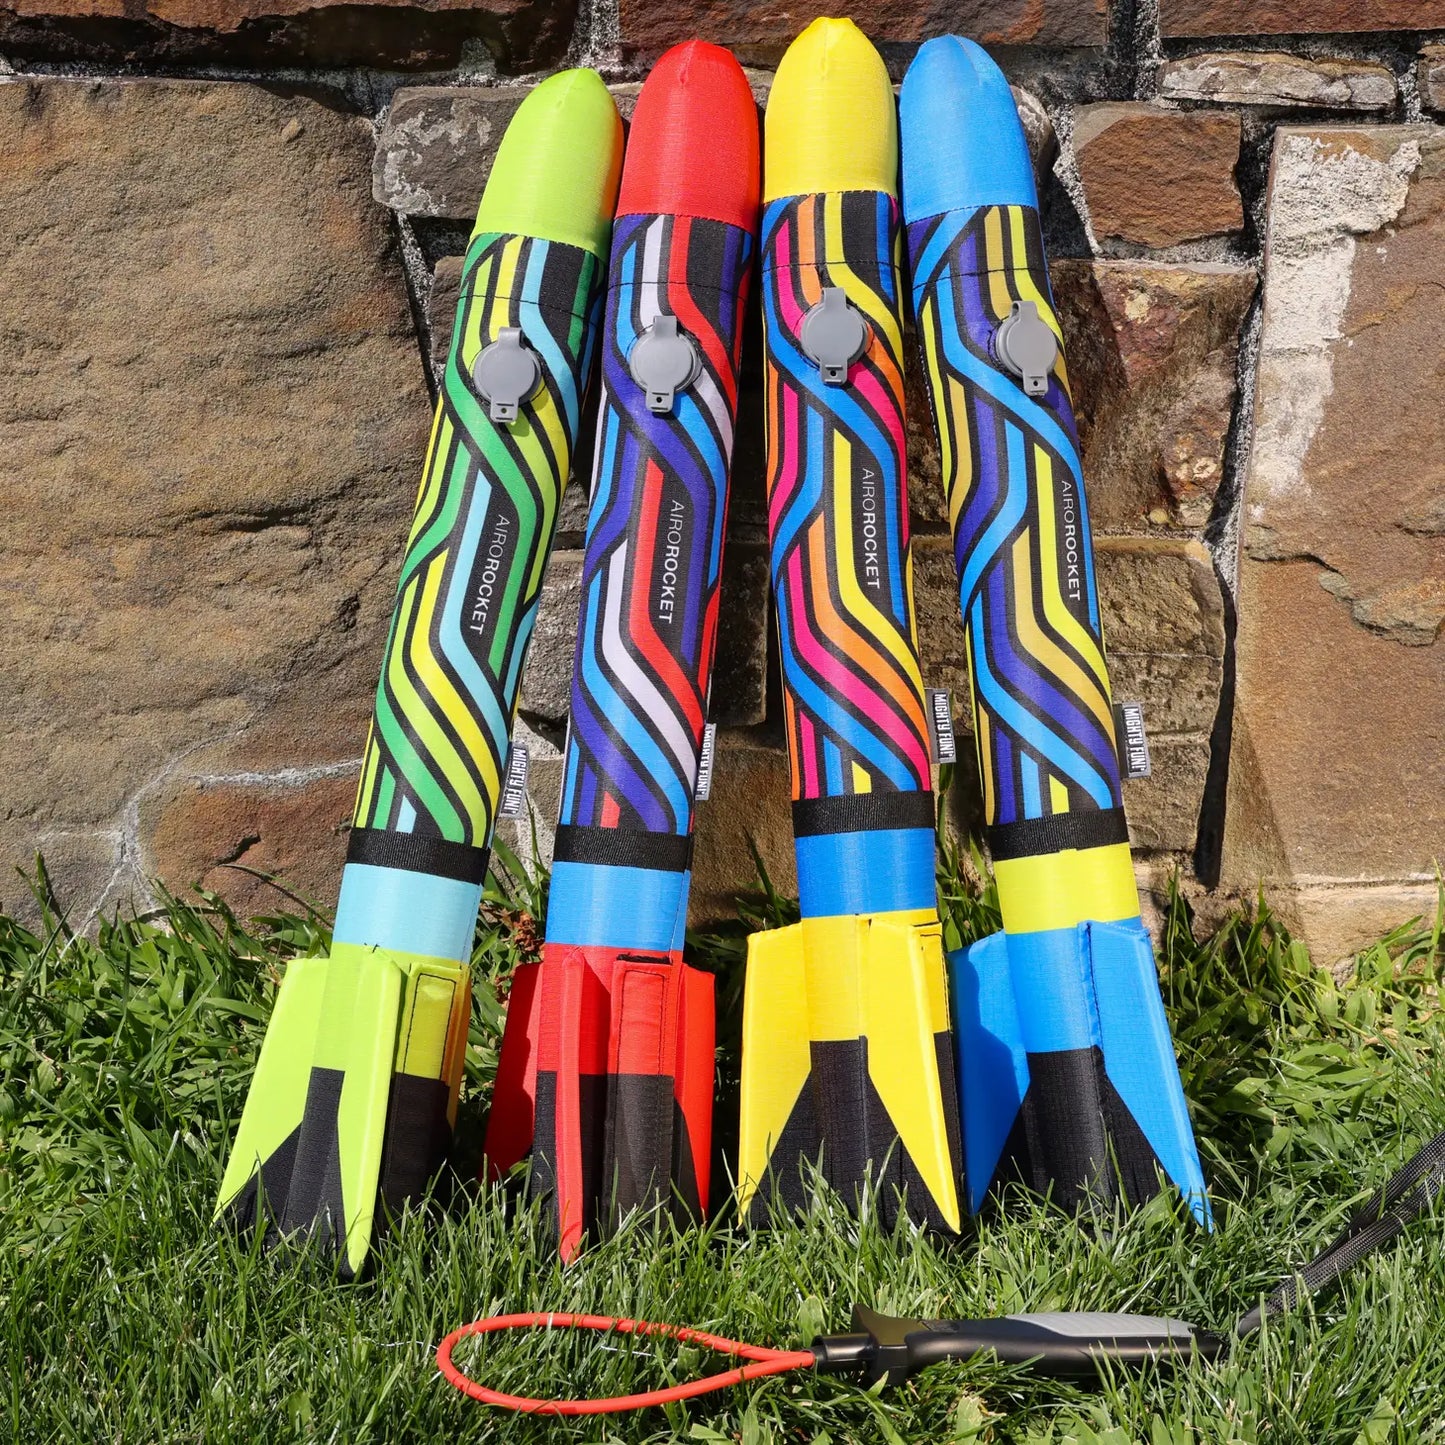 Airo Rocket™ - 20" Inflatable Rocket